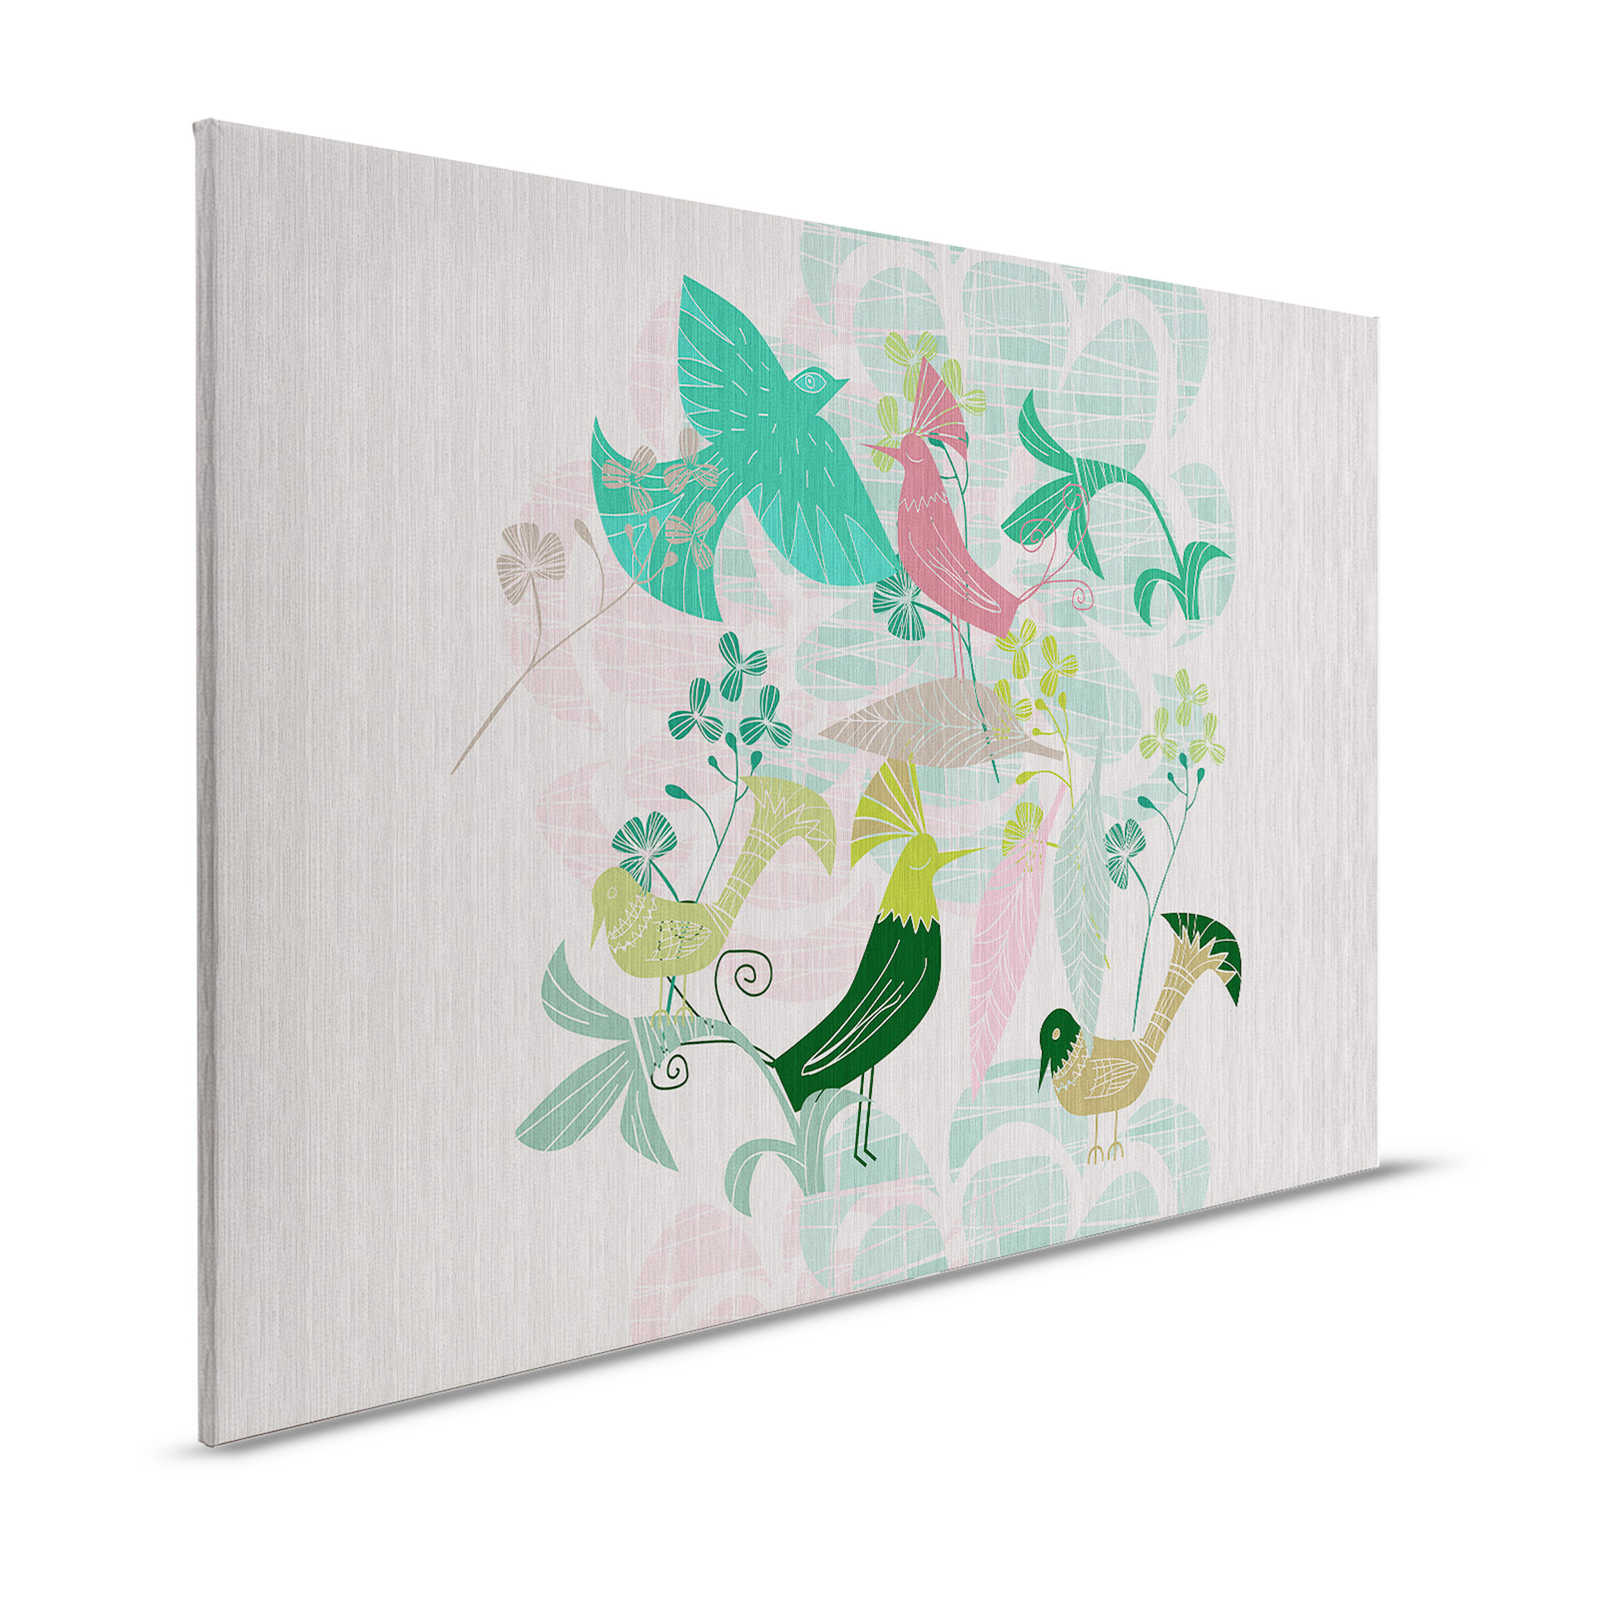         Birdland 3 - Leinwandbild Grün & Rosa Vögel Muster im Retro Stil – 1,20 m x 0,80 m
    